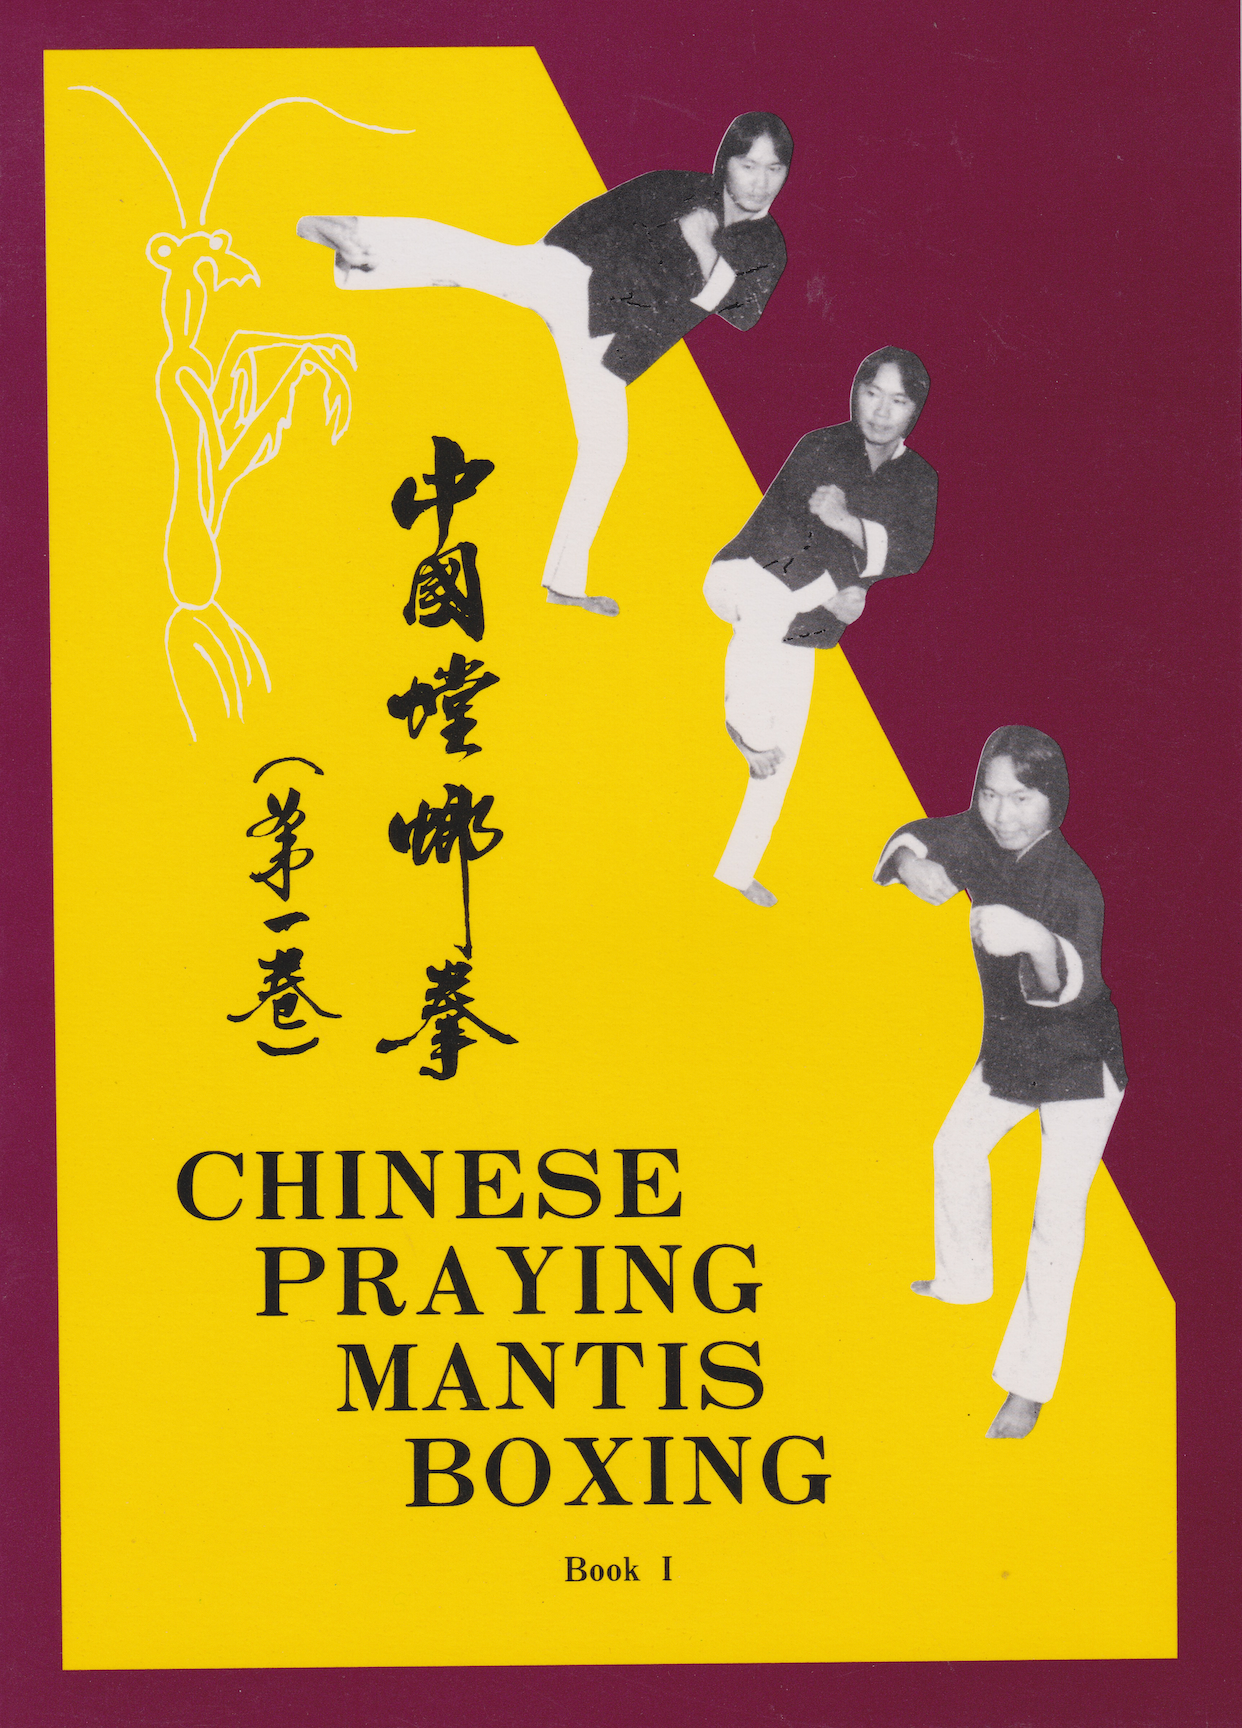 Chinese Praying Mantis Boxing Book I by HC Chao